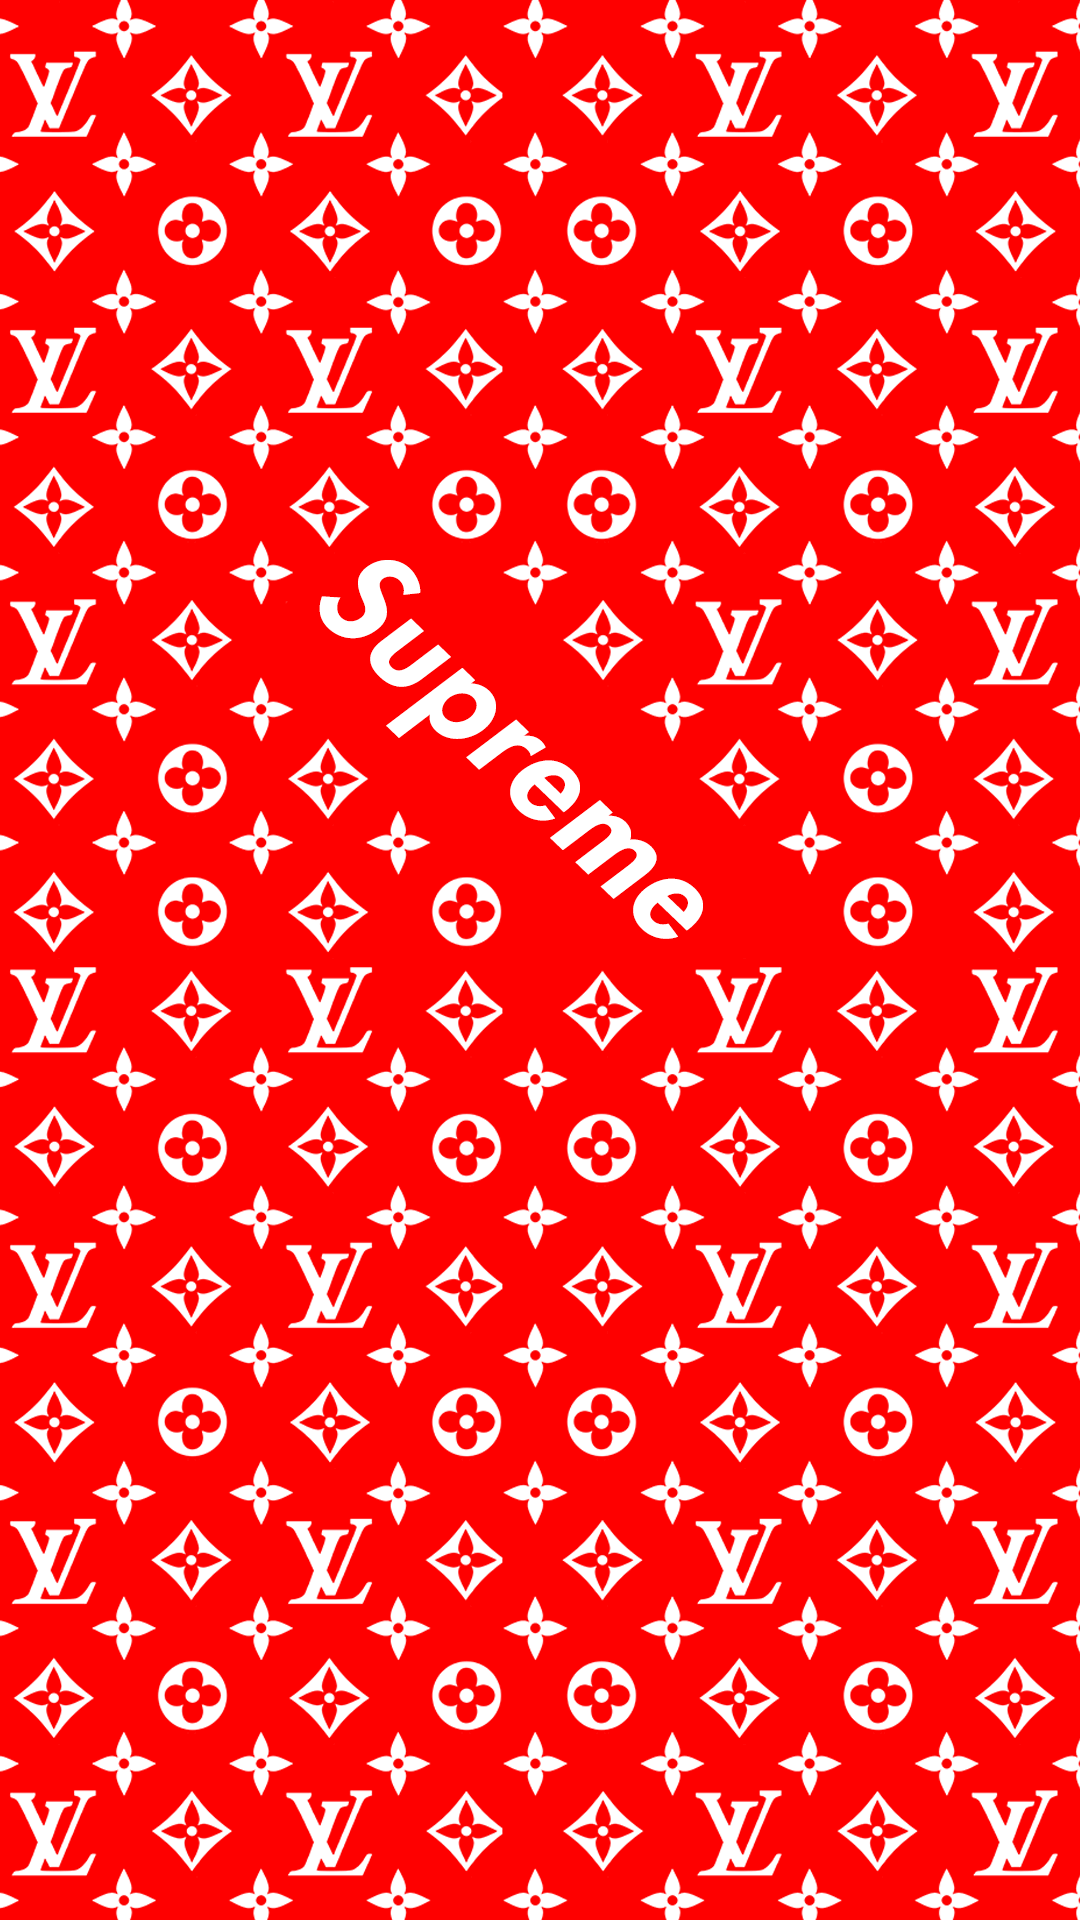 supreme lv logo